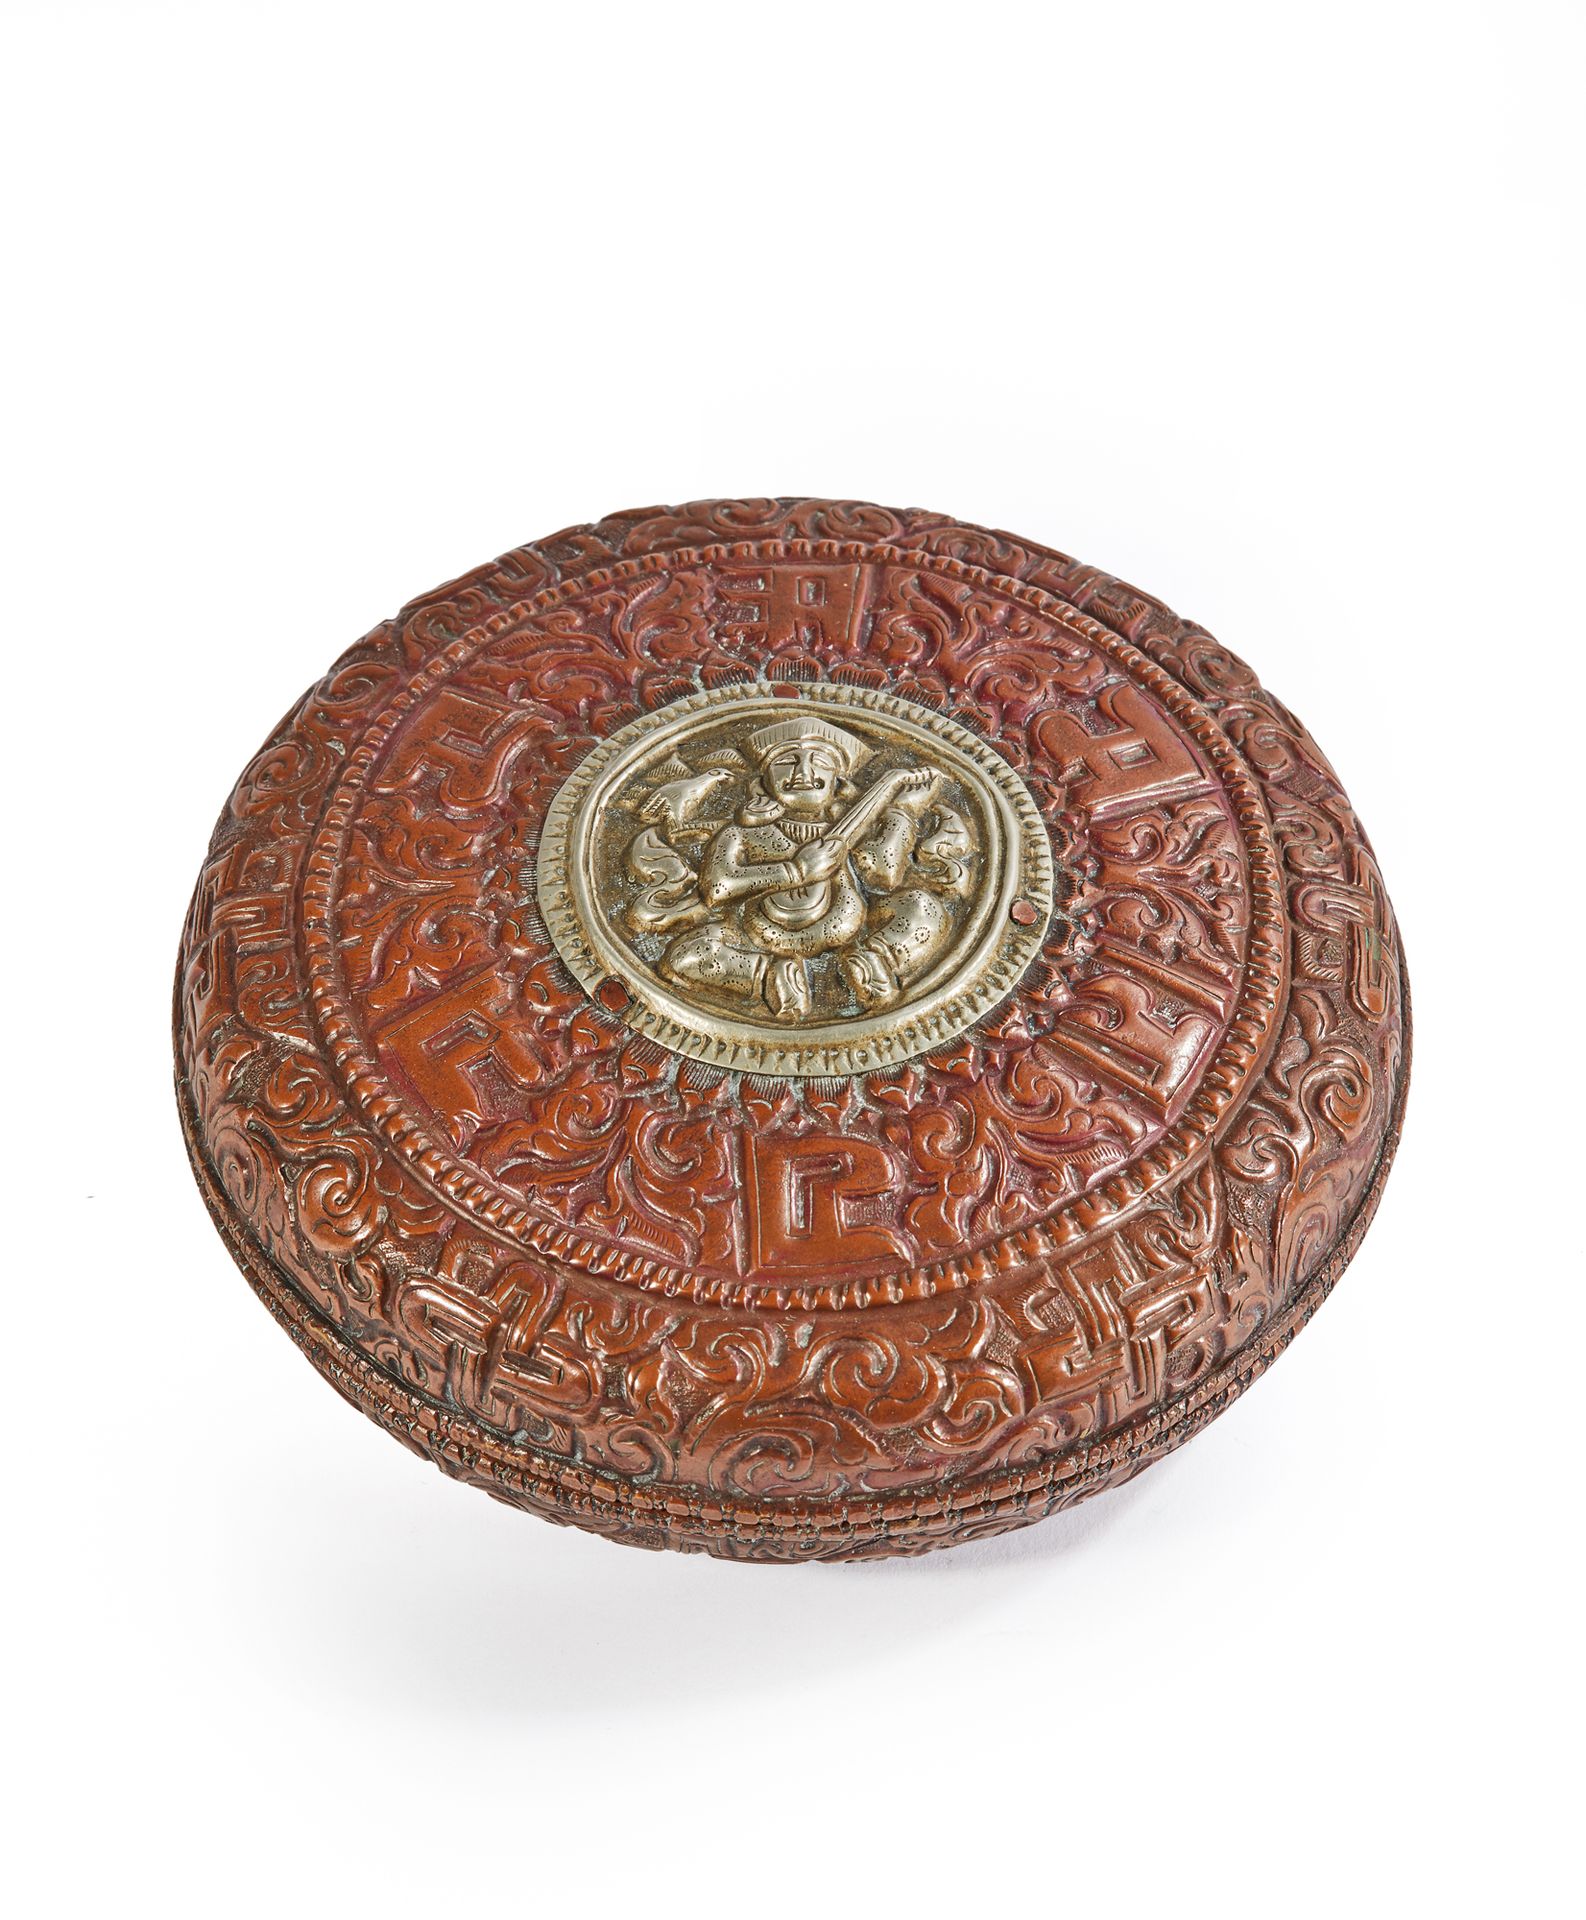 TIBET OU BHUTAN - XIXe siècle 一个圆形的铜盒，上面压印着花的卷轴和咒语，围绕着一个银盘，上面压印着一个弹琴的人物。
直径13厘米